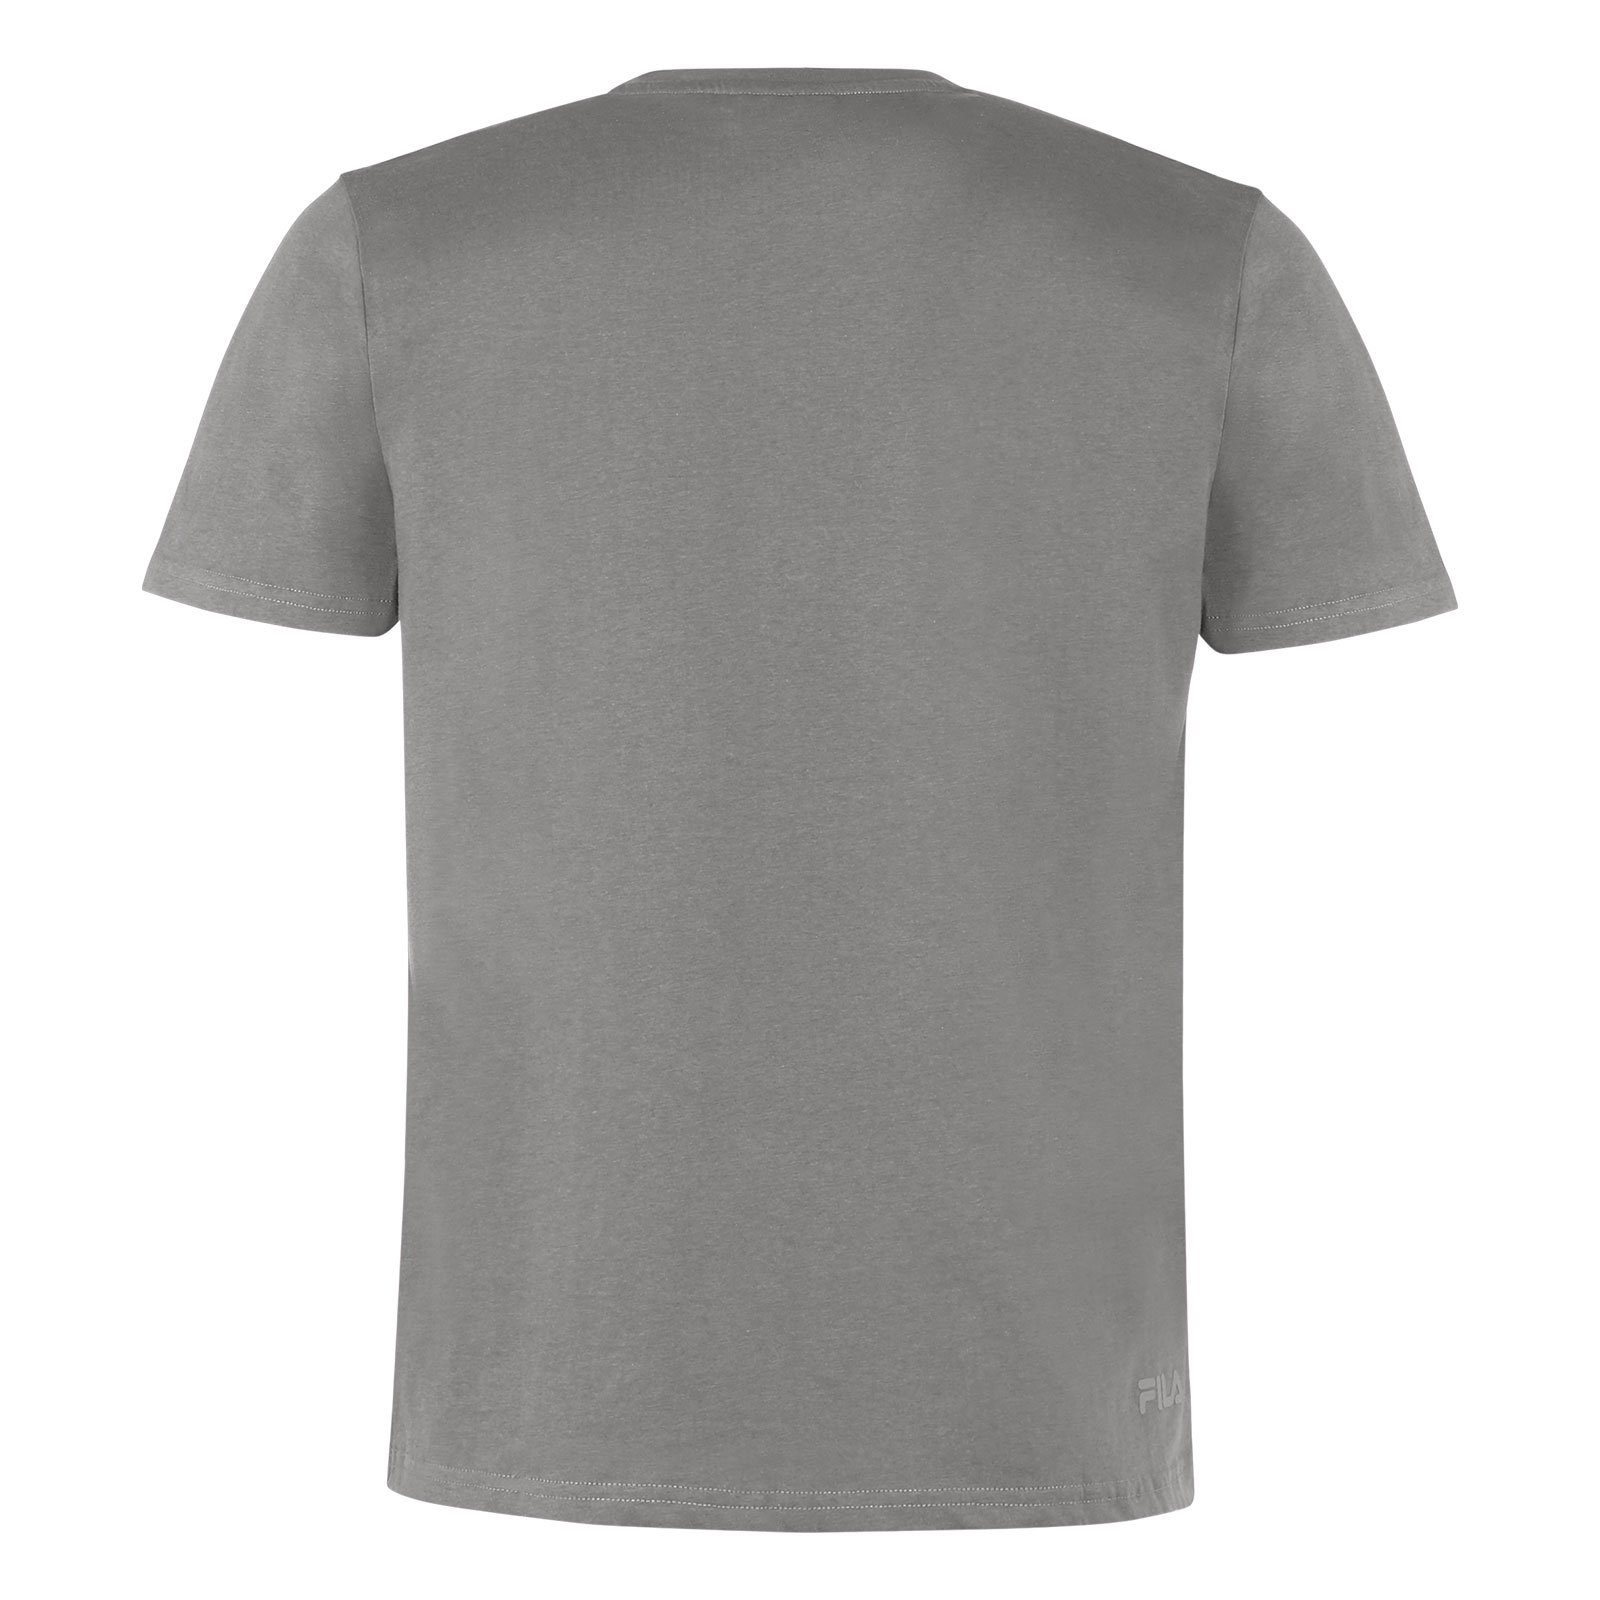 Fila stylischem mit Outline-FILA-Logo Tee 80028 gull Bibbiena T-Shirt